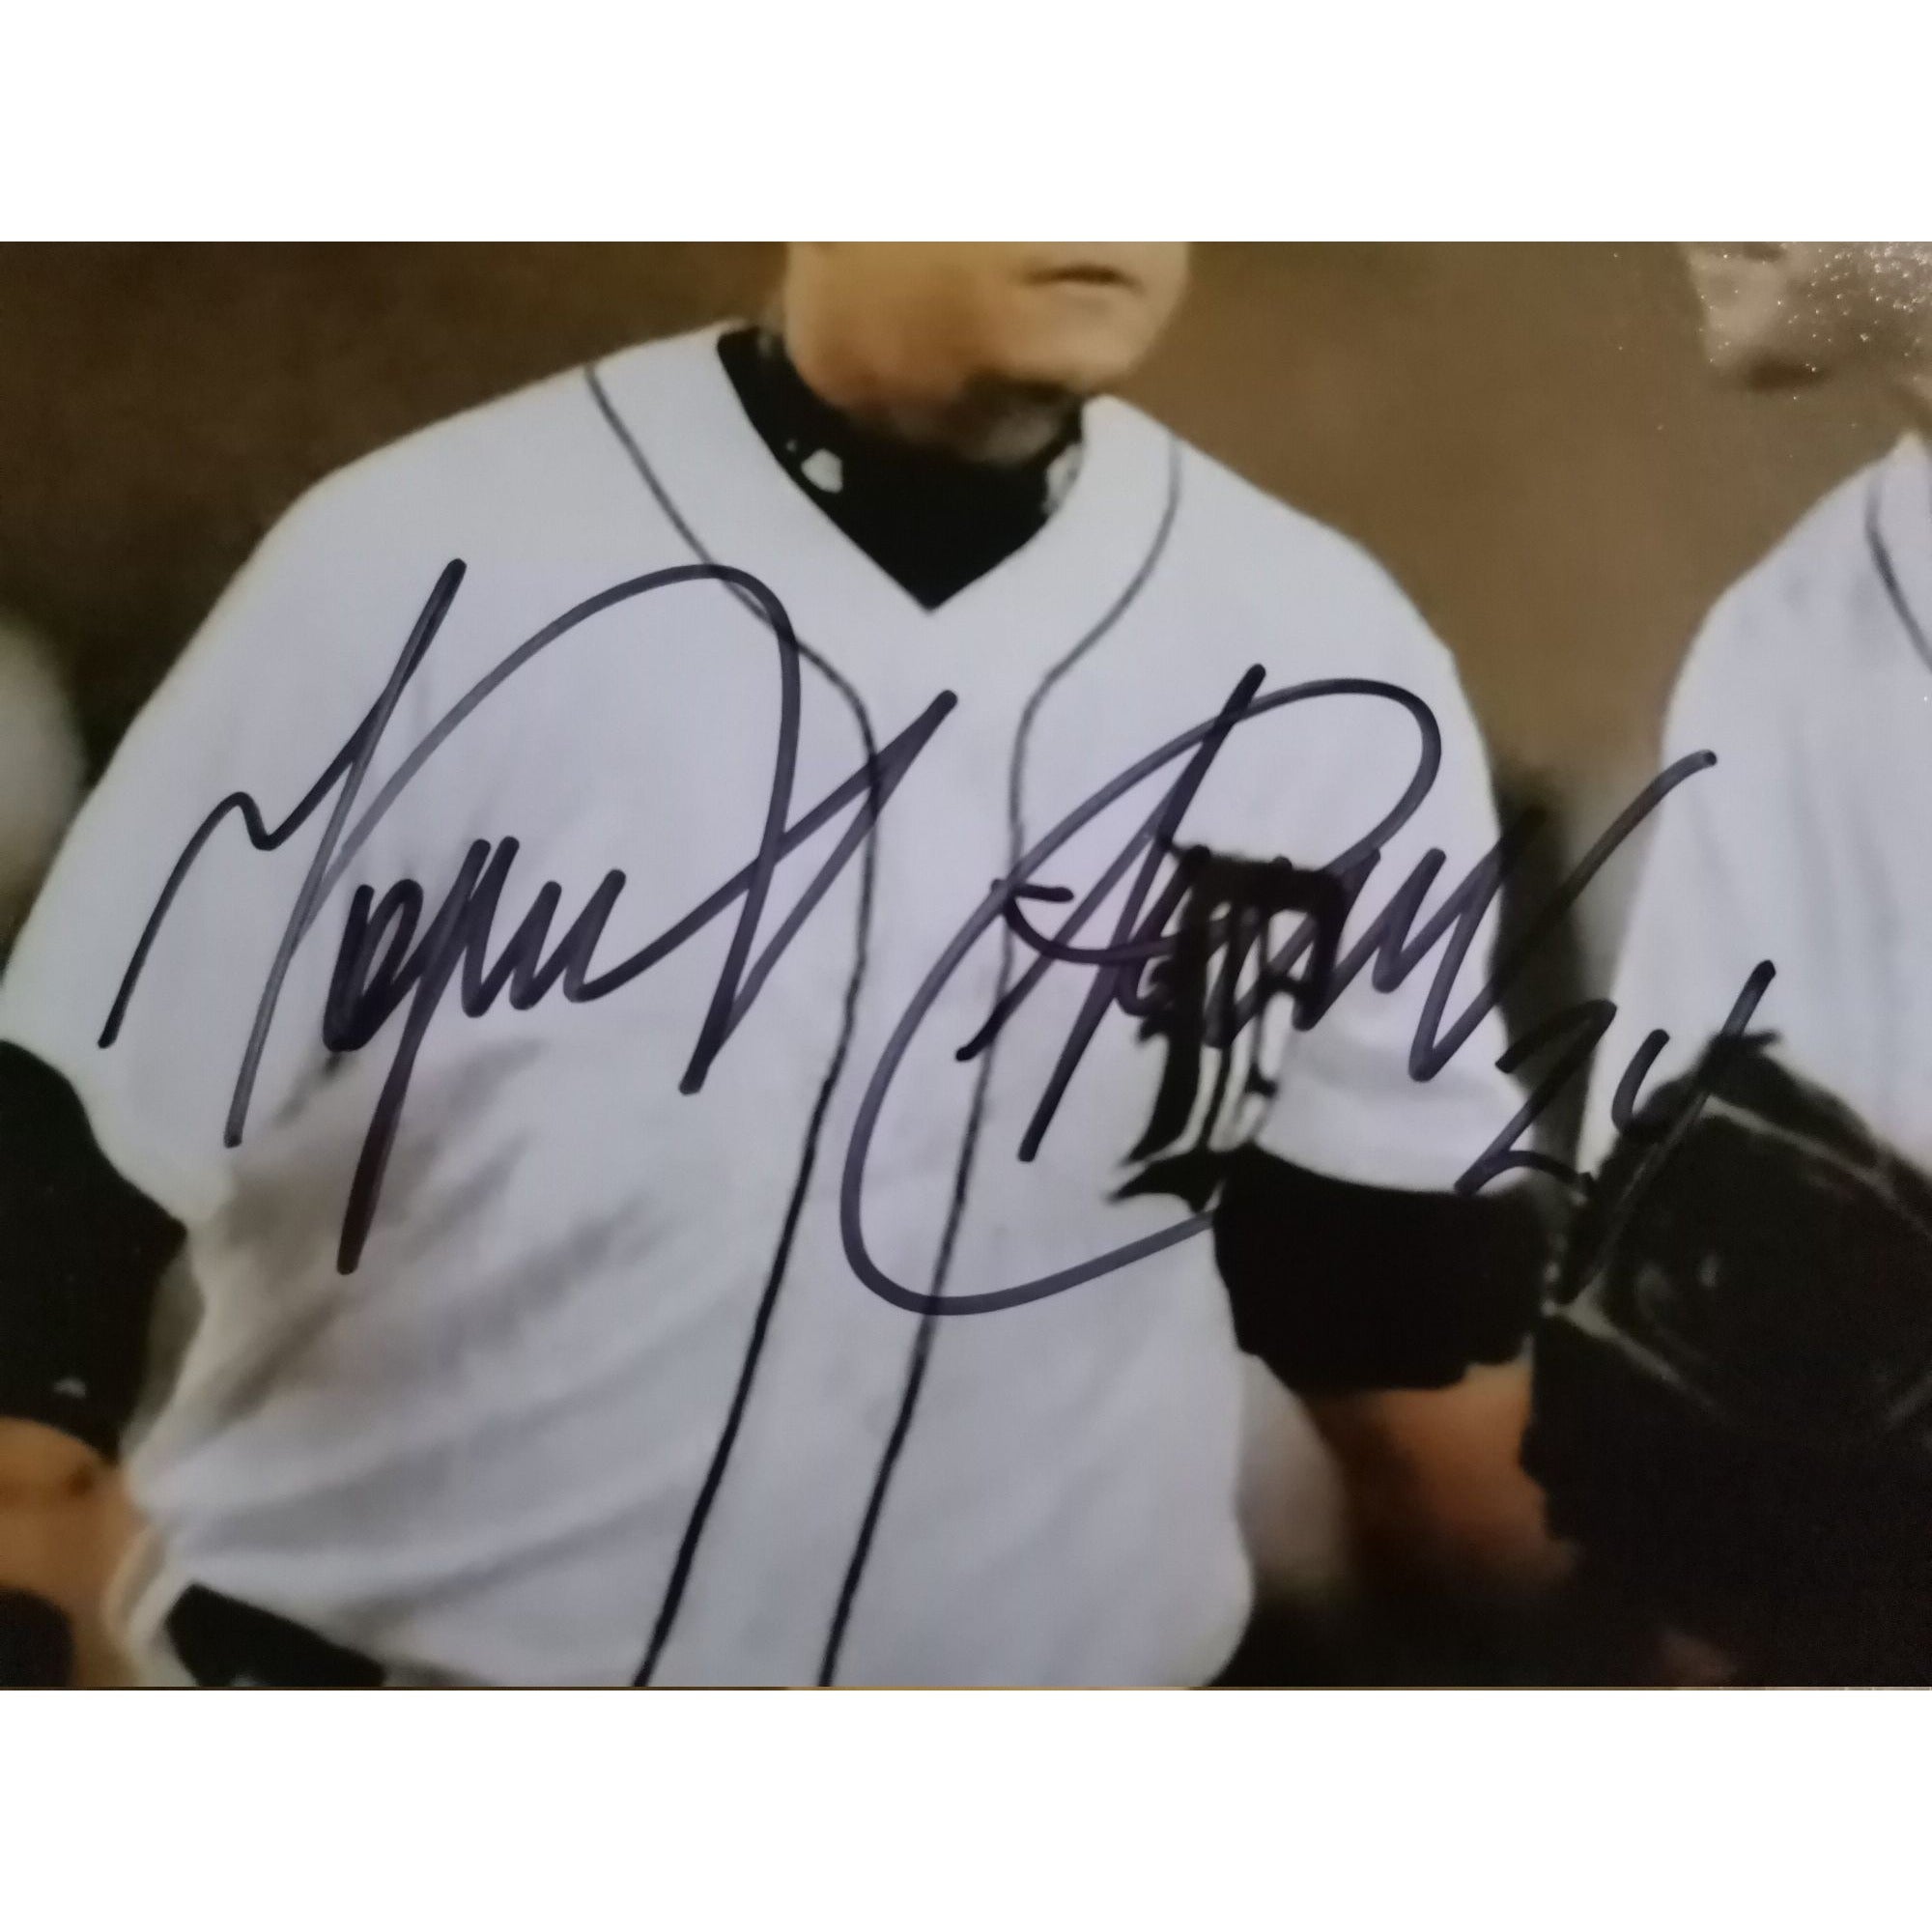 Justin Verlander and Miguel Cabrera 8 x 10 signed photo